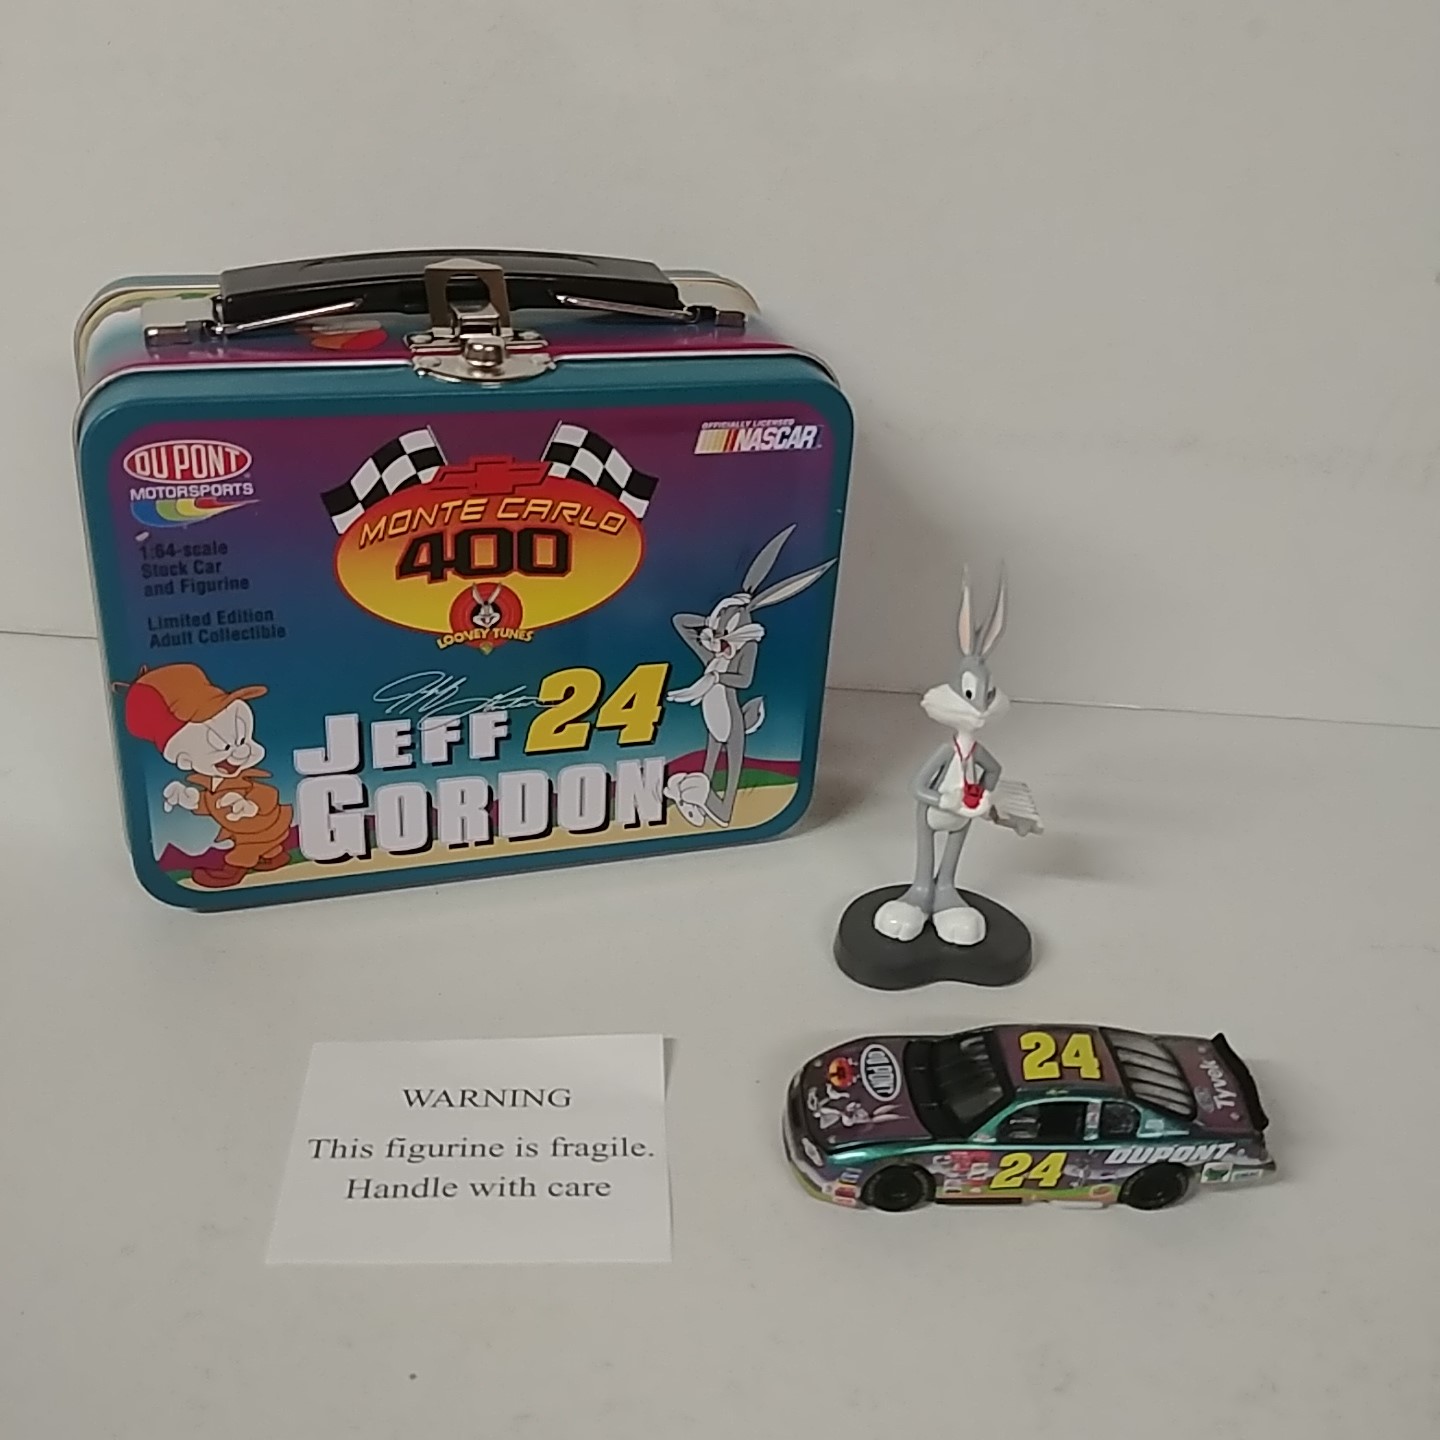 2001 Jeff Gordon 1/64th Dupont "Looney Tunes" RCCA hood open car w/figurine in lunch box